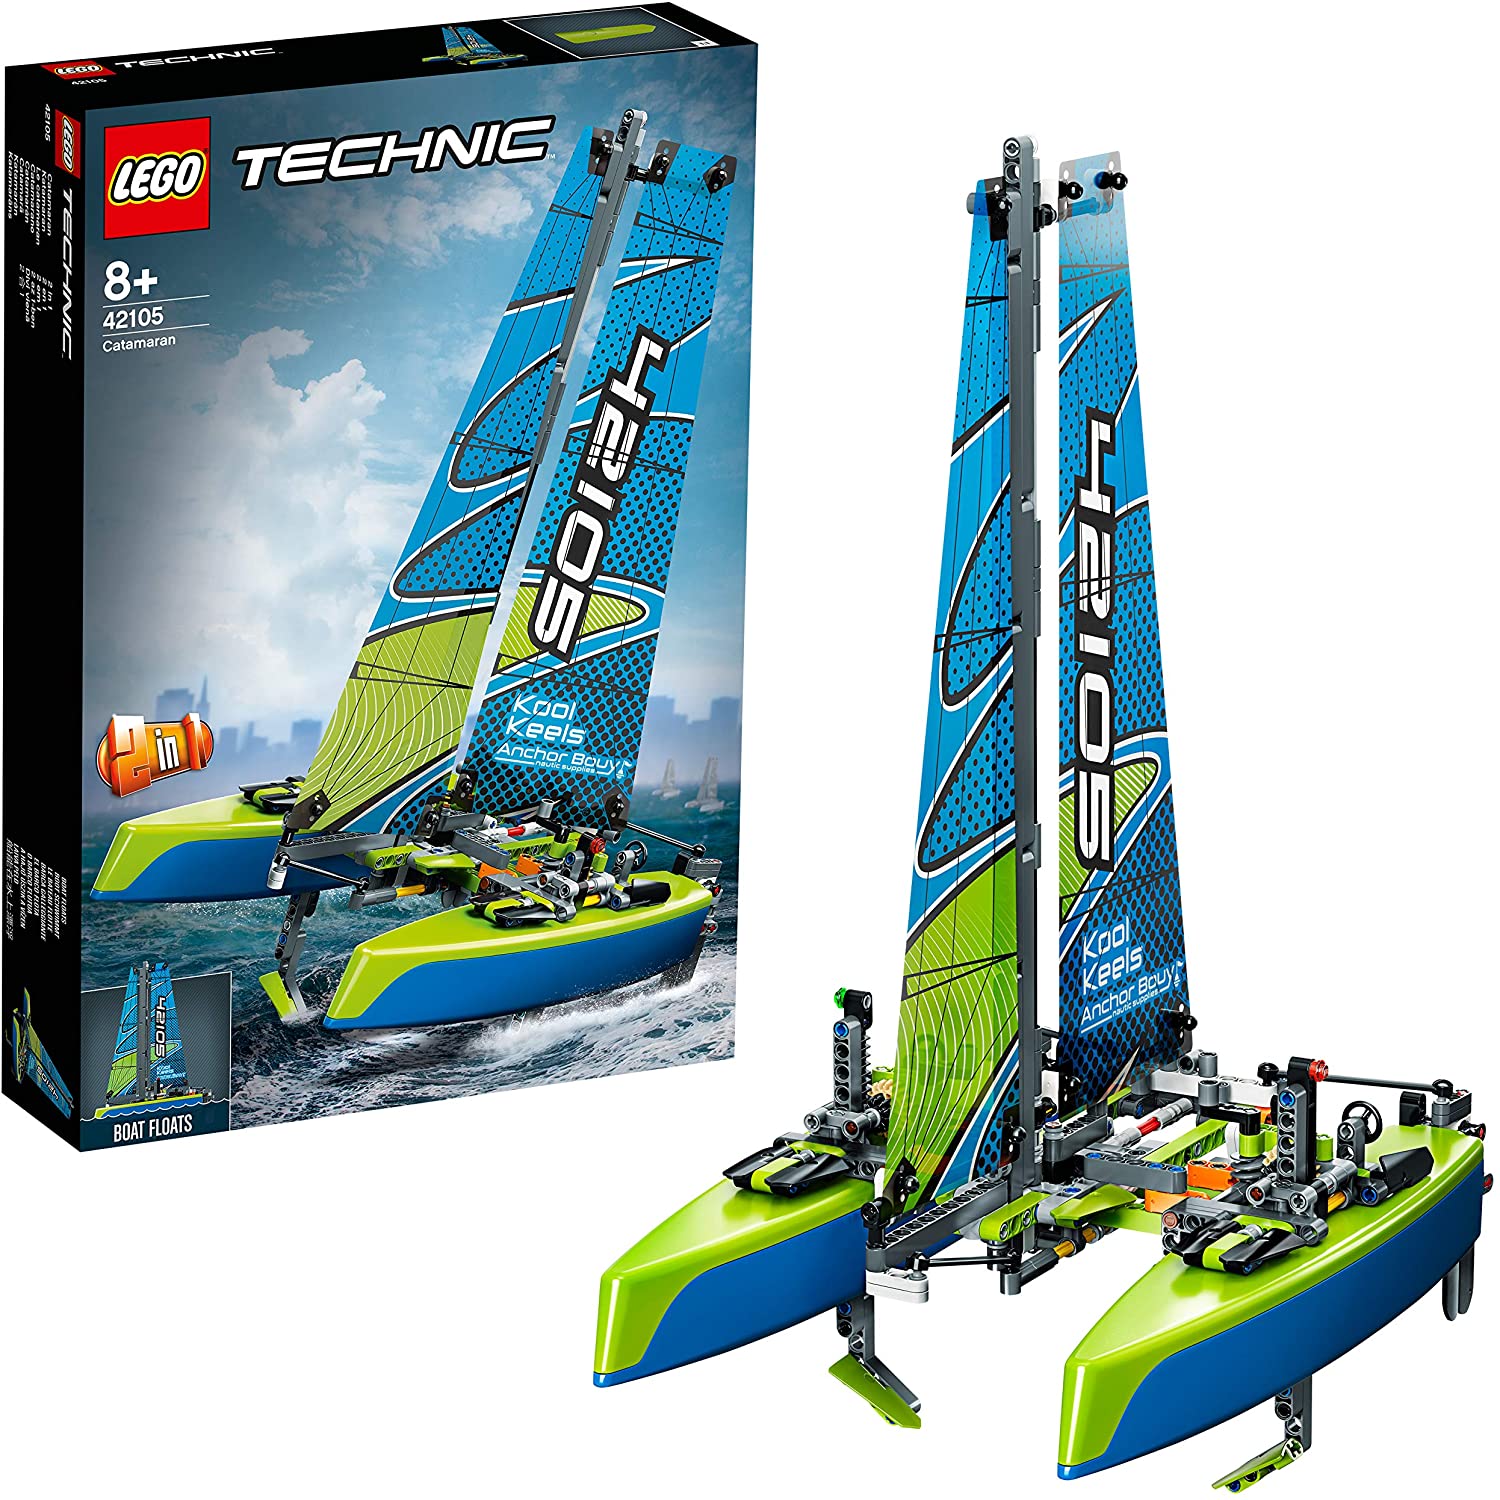 Lego Technic Catamaran Model Sailboat Building Kit, 404 Pieces - ANB Baby -block set